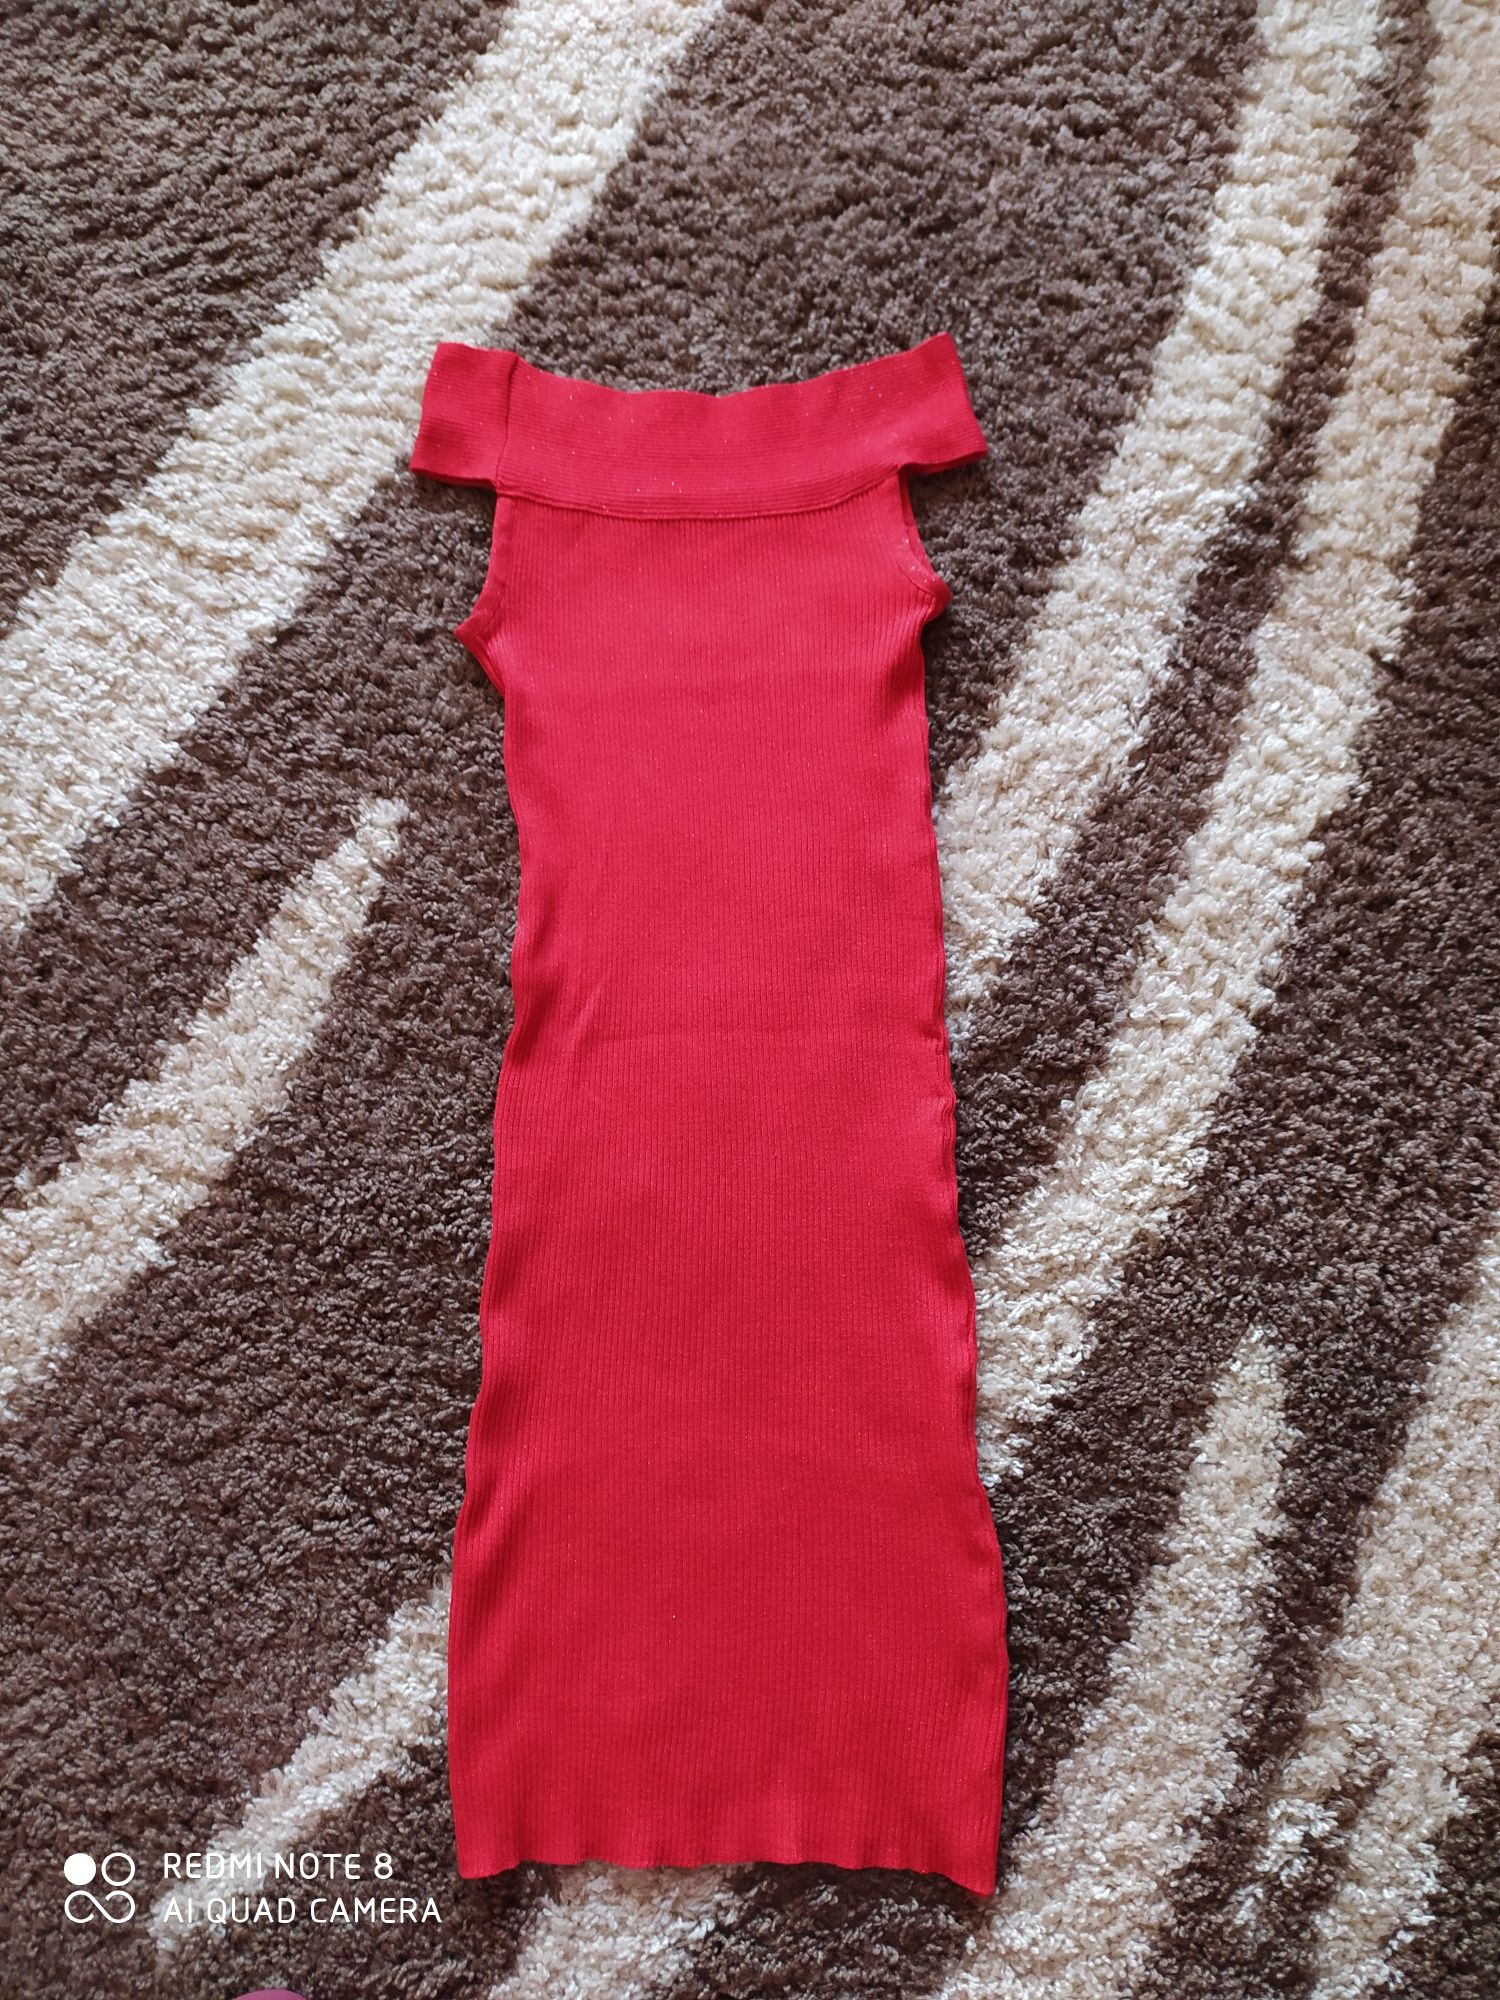 Жіноче женские Плаття платье сукня в рубчик 46розмір